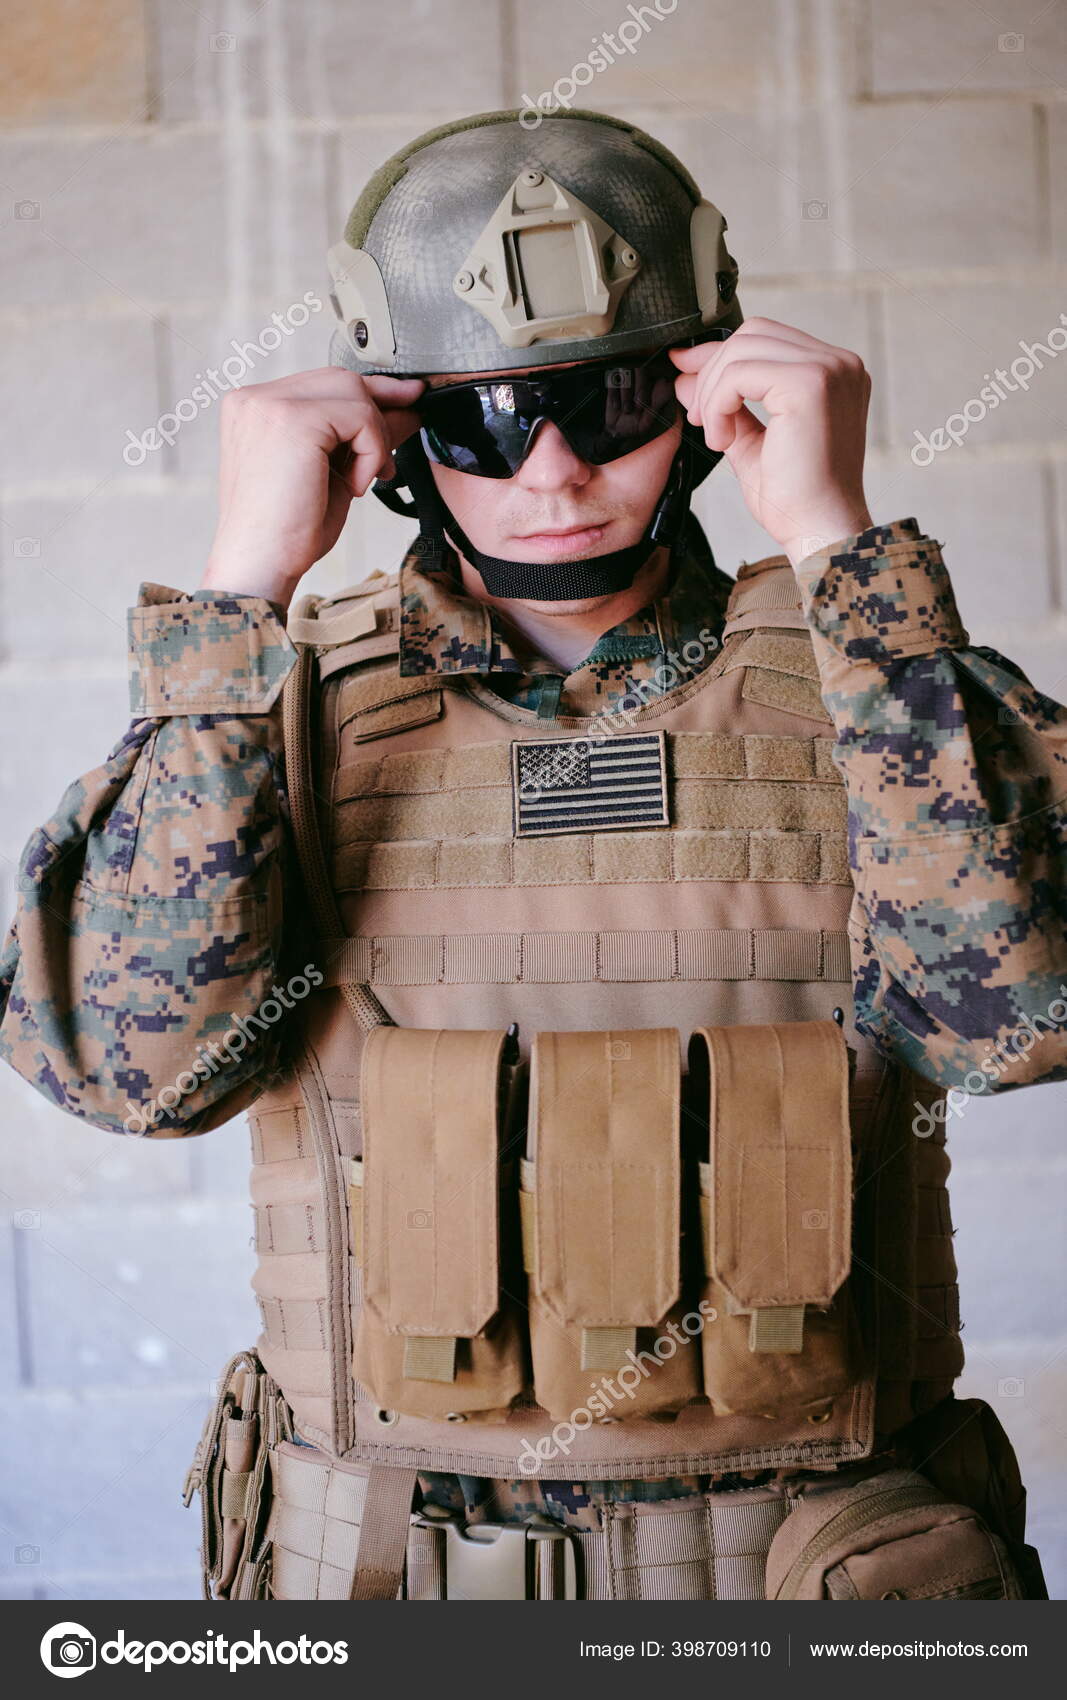 https://st4.depositphotos.com/1003697/39870/i/1600/depositphotos_398709110-stock-photo-soldier-preparing-tactical-protective-communication.jpg